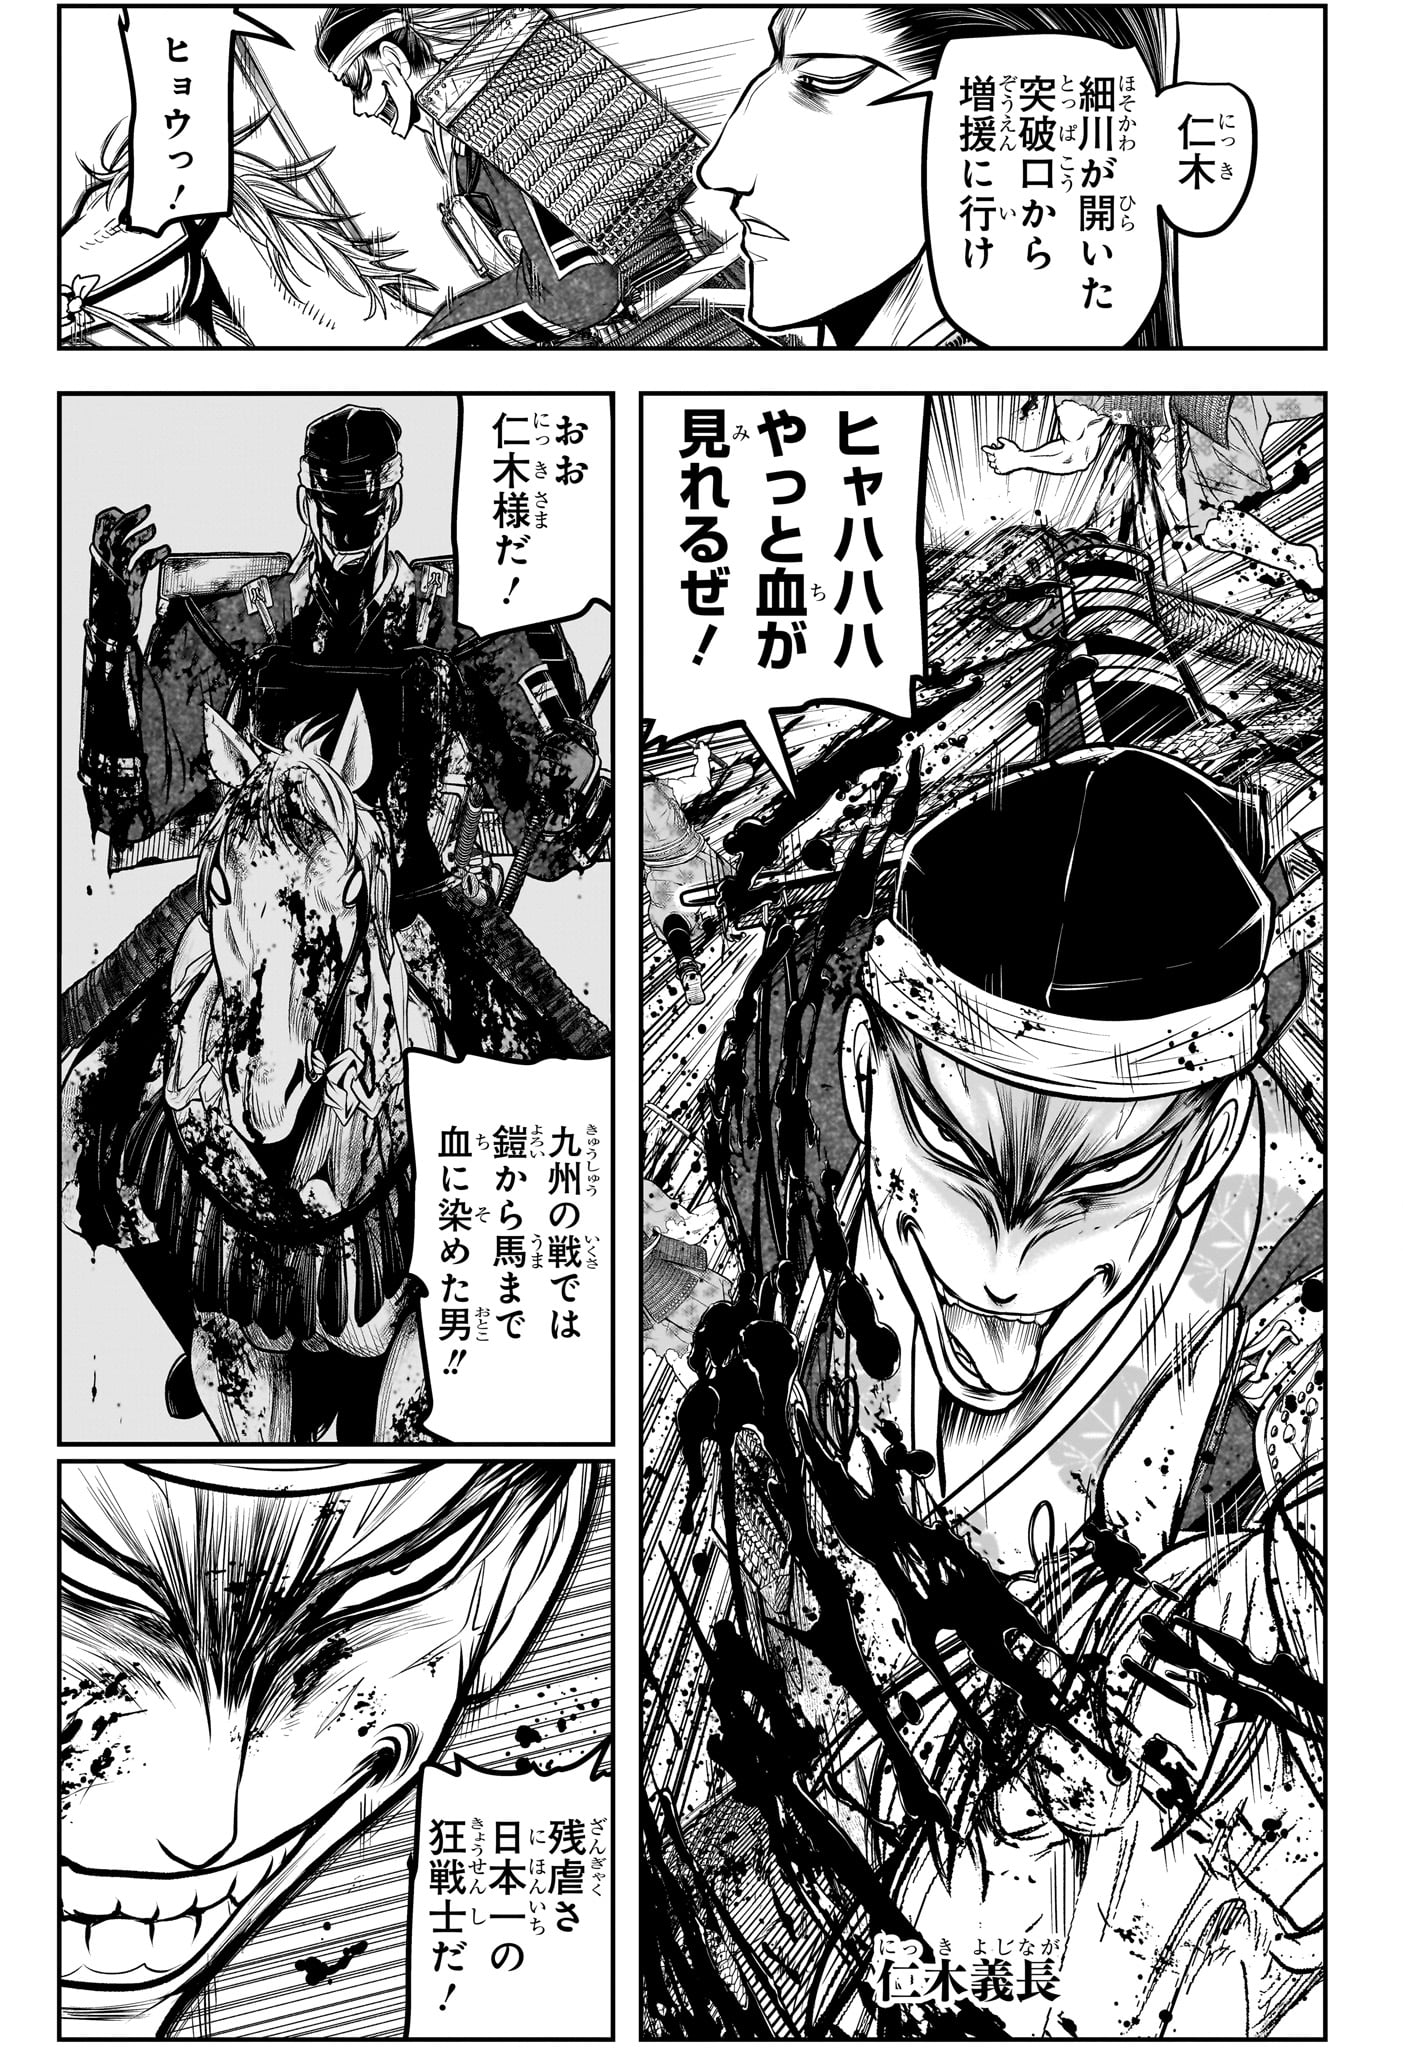 Nige Jouzu no Wakagimi - Chapter 158 - Page 9